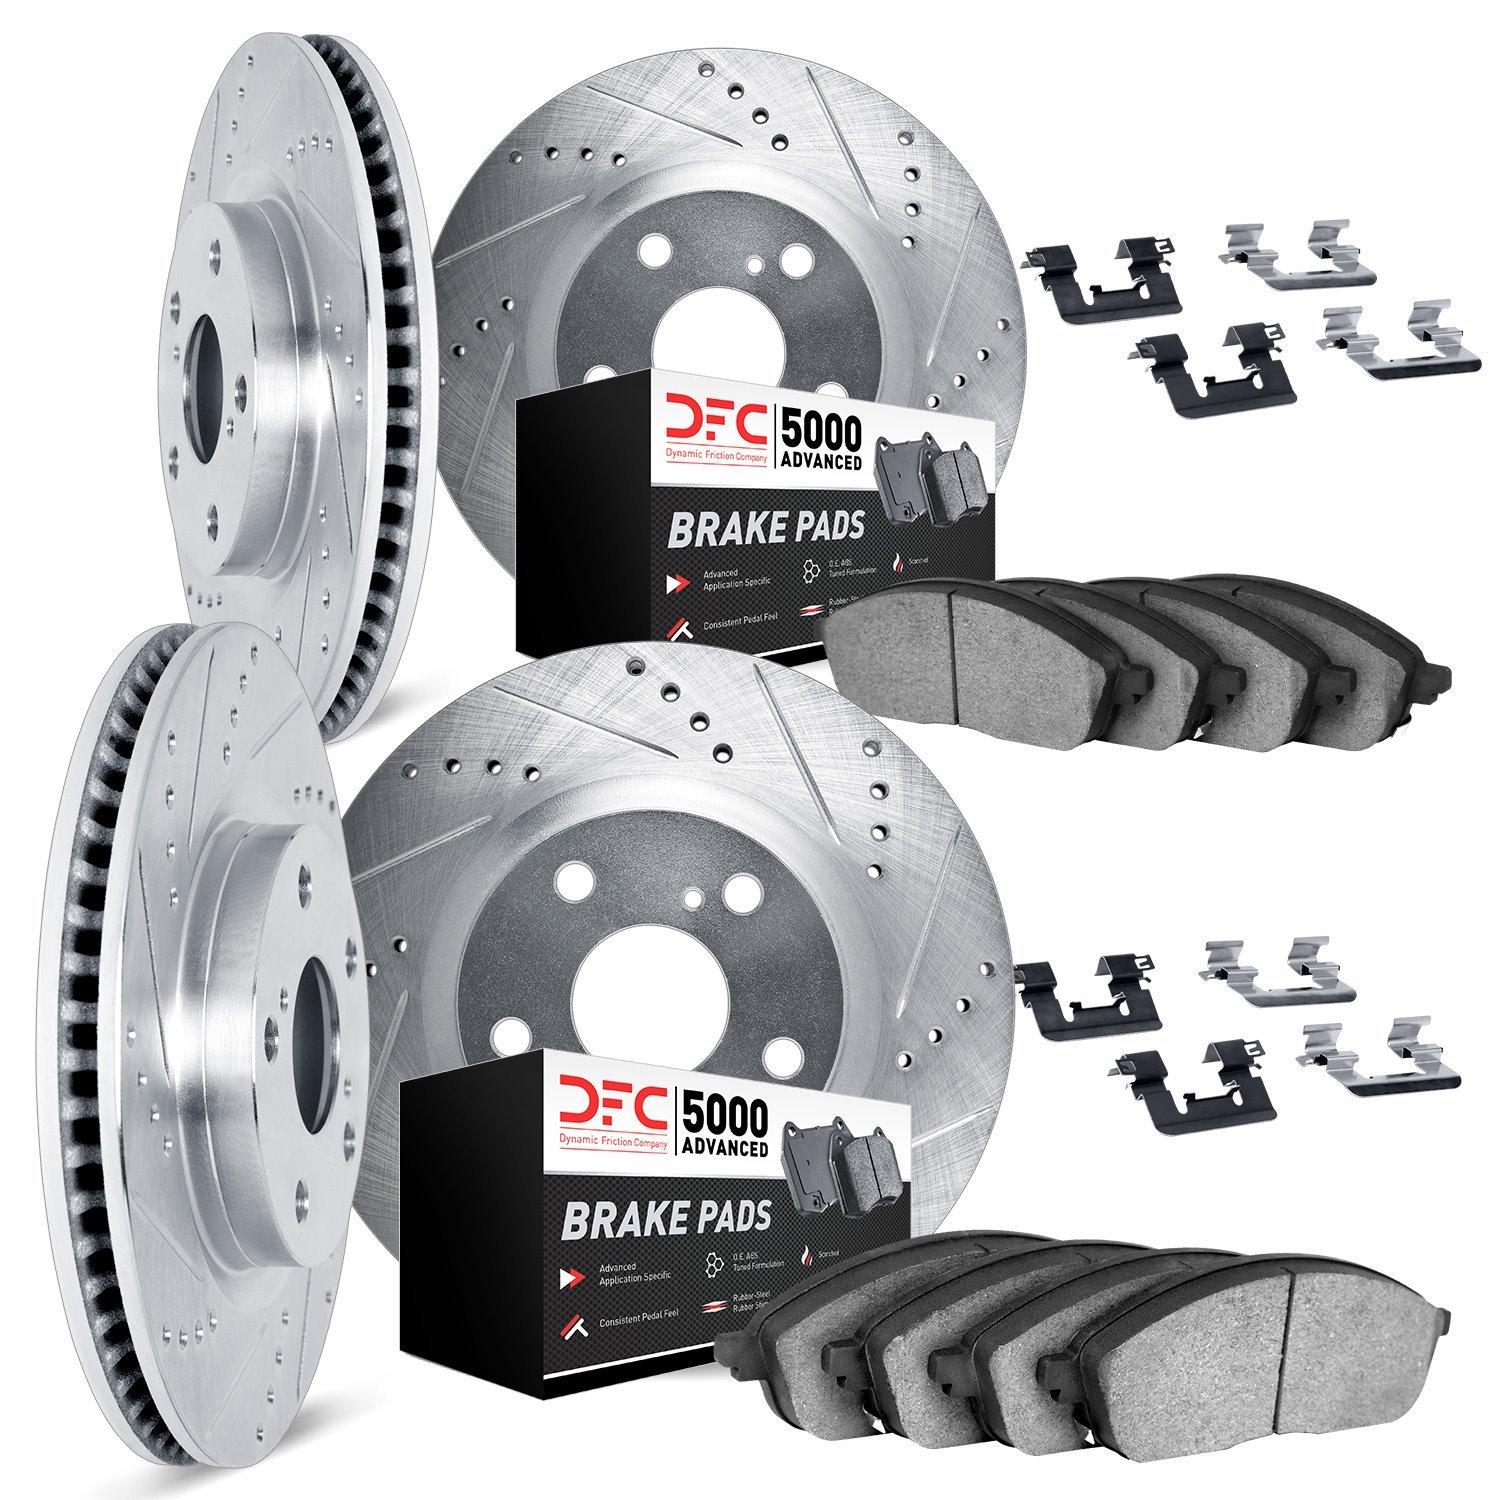 7514-74032 Drilled/Slotted Brake Rotors w/5000 Advanced Brake Pads Kit & Hardware [Silver], 2003-2015 Multiple Makes/Models, Pos